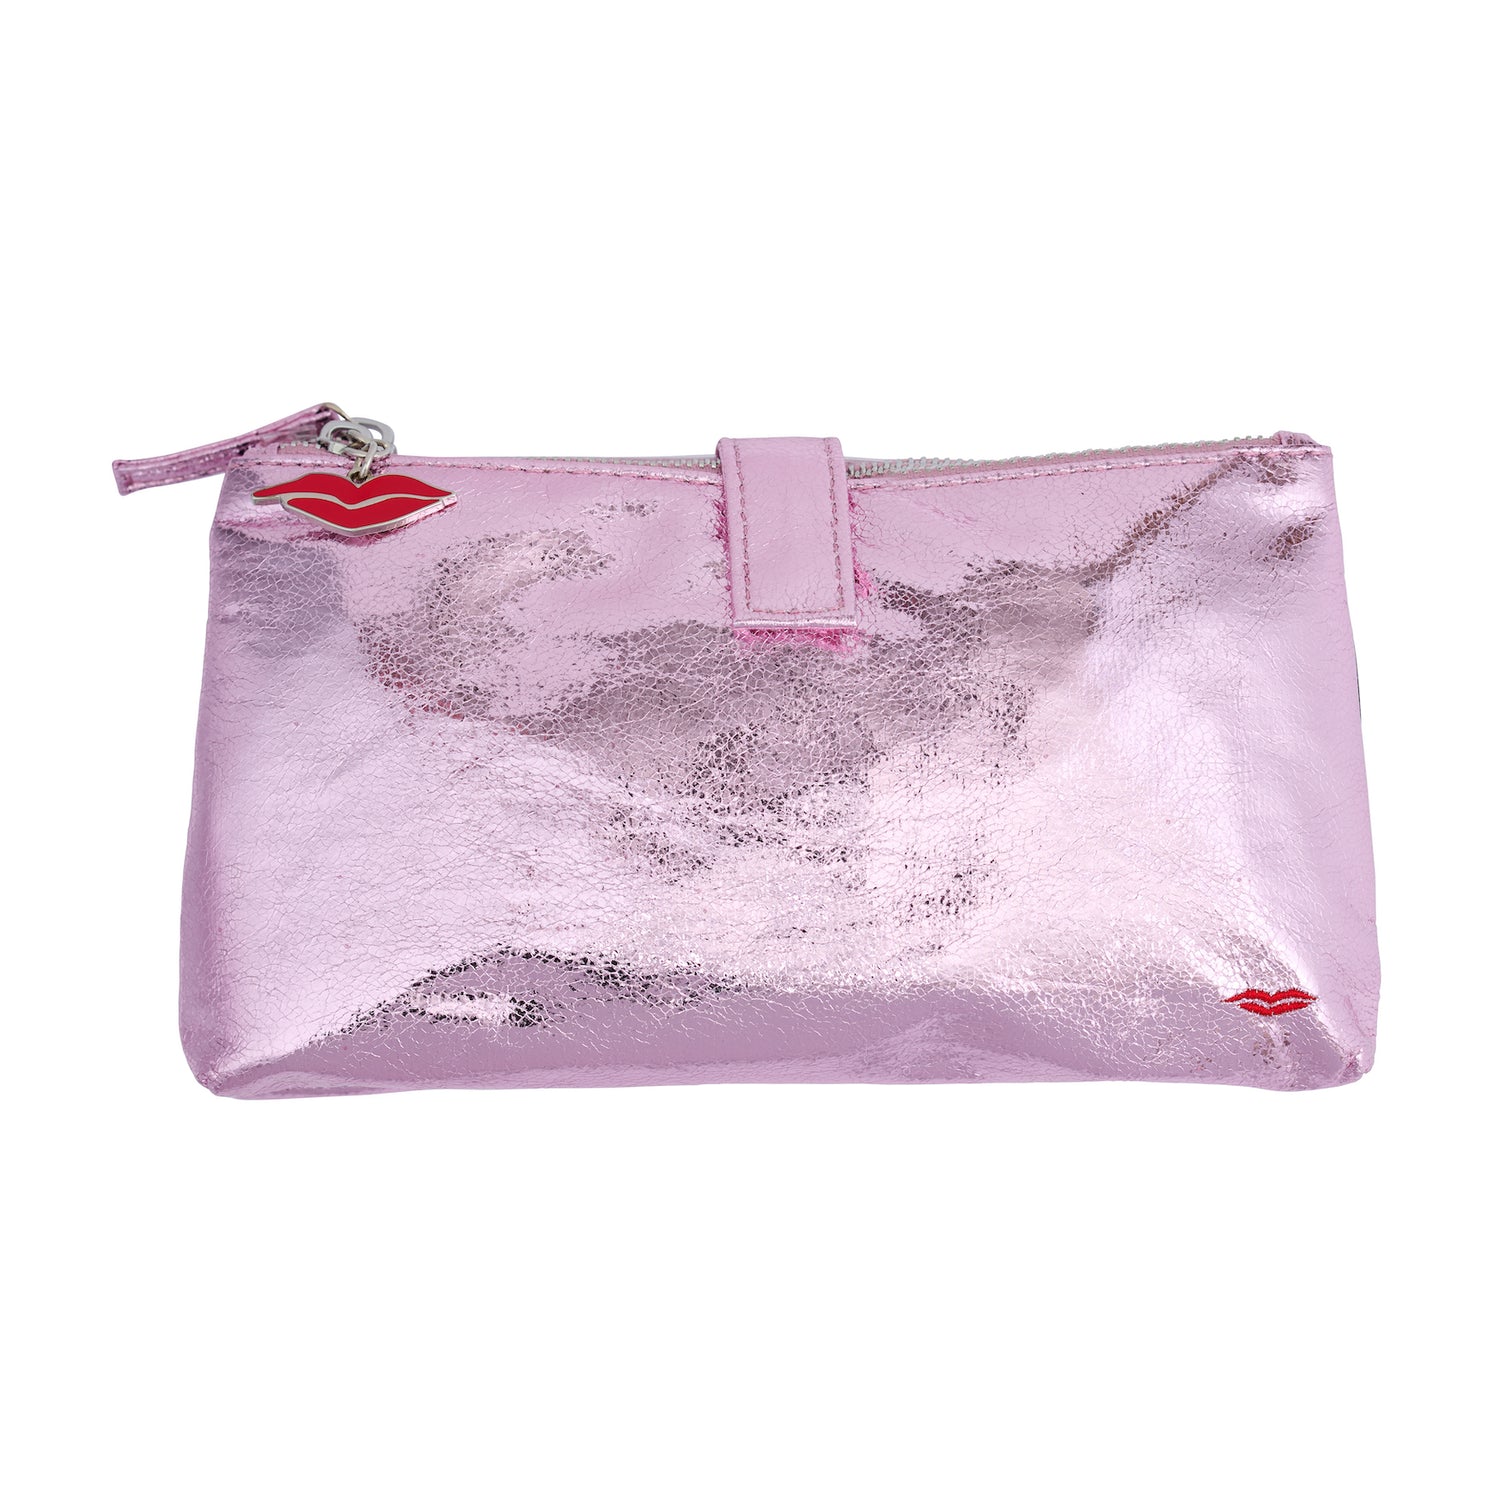 Knick Knack Bag - Double Flat Lay Organiser in Blush Pink